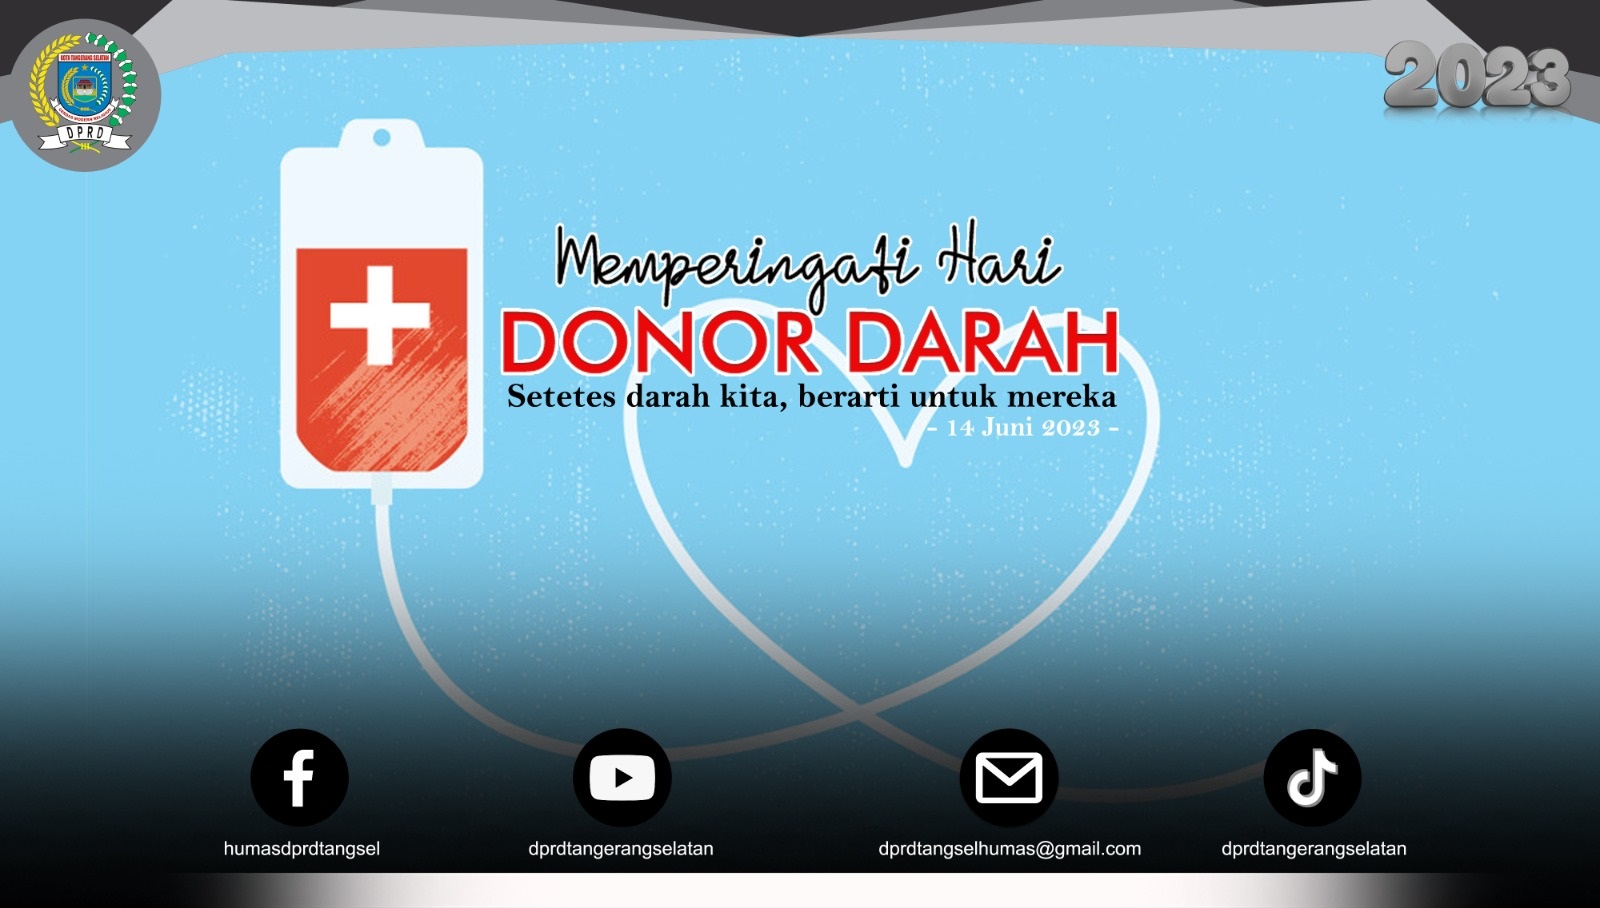 Memperingati Hari Donor Darah. 14 Juni 2023.